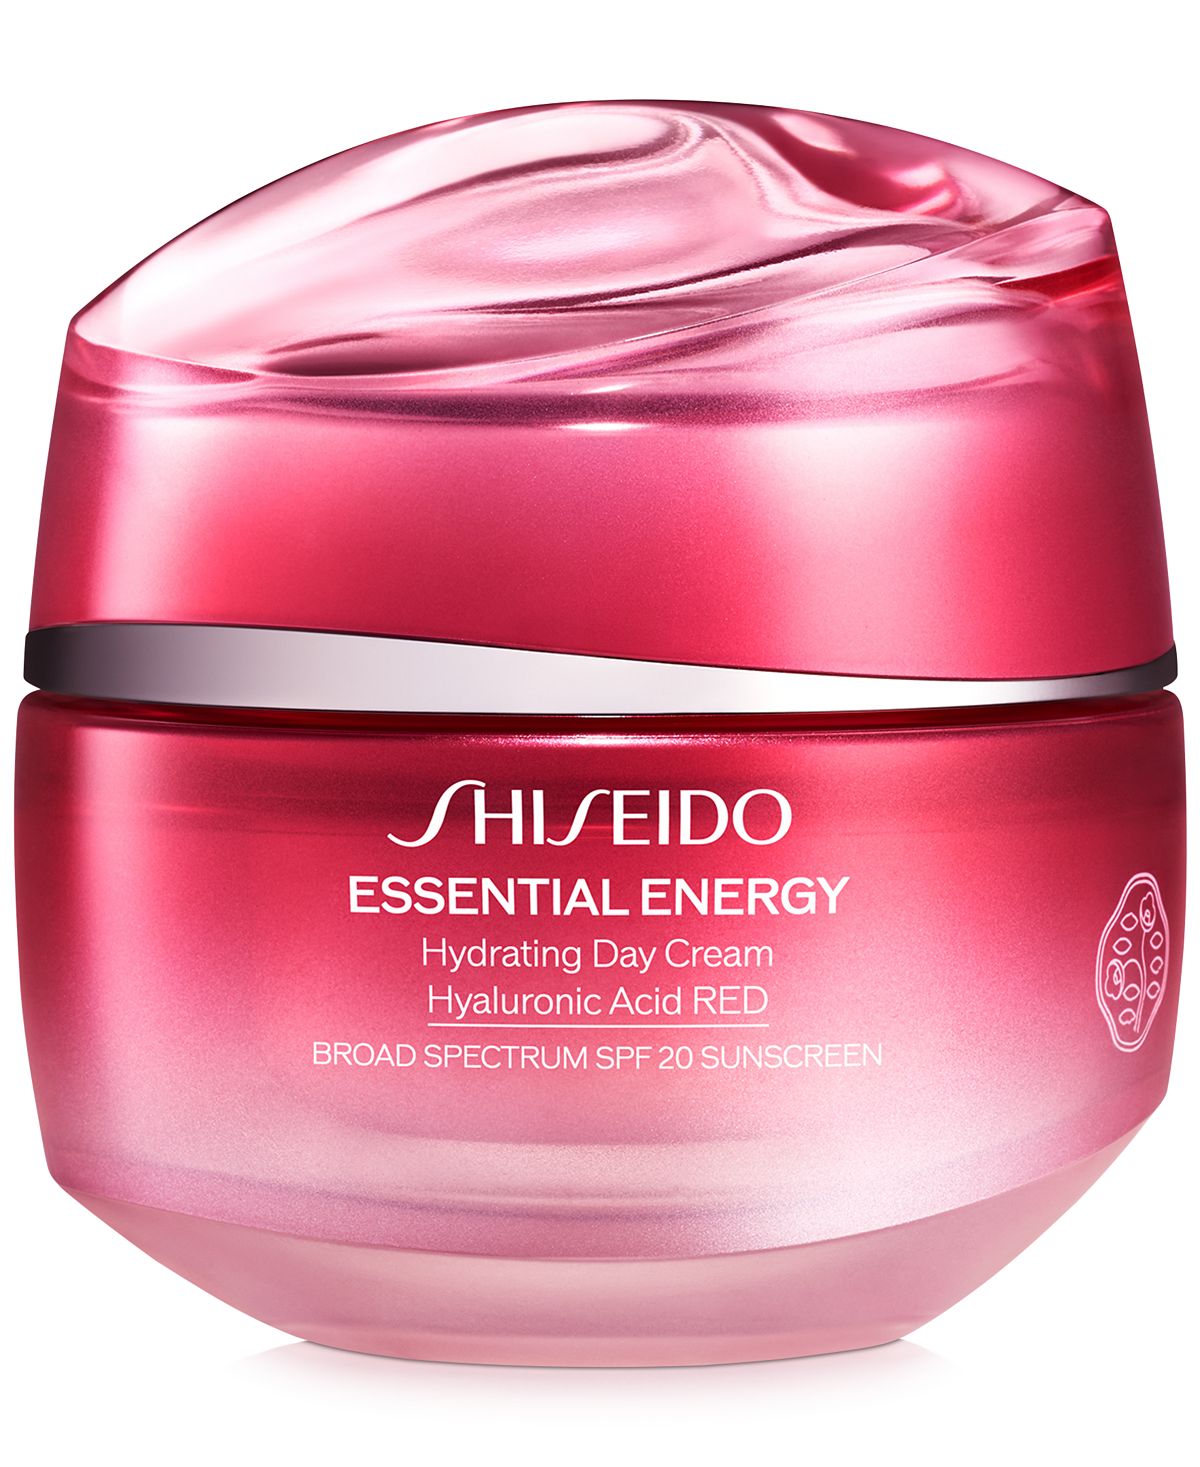 Shiseido - Essential Energy Hydrating Day Cream SPF 20, 1.7 oz.